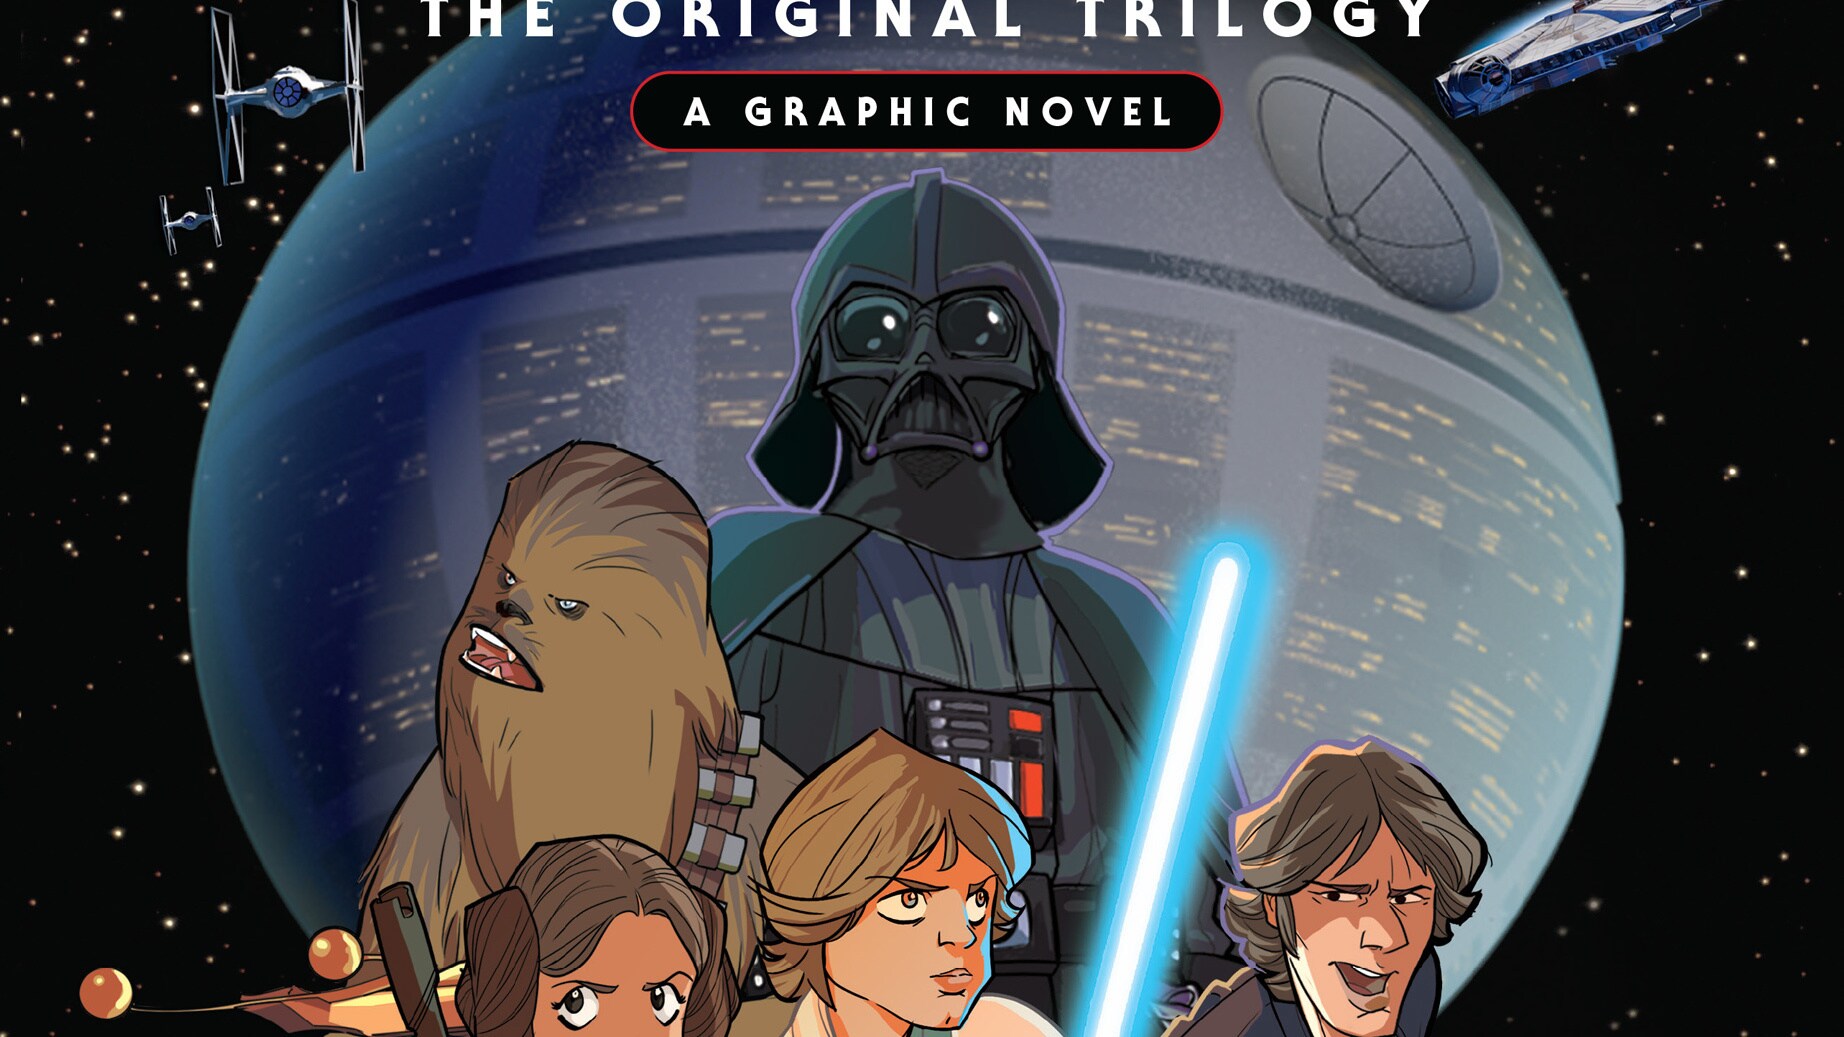 Reimagining a Saga: How Disney-Lucasfilm Press Made the Beautiful Star Wars: The Original Trilogy - A Graphic Novel